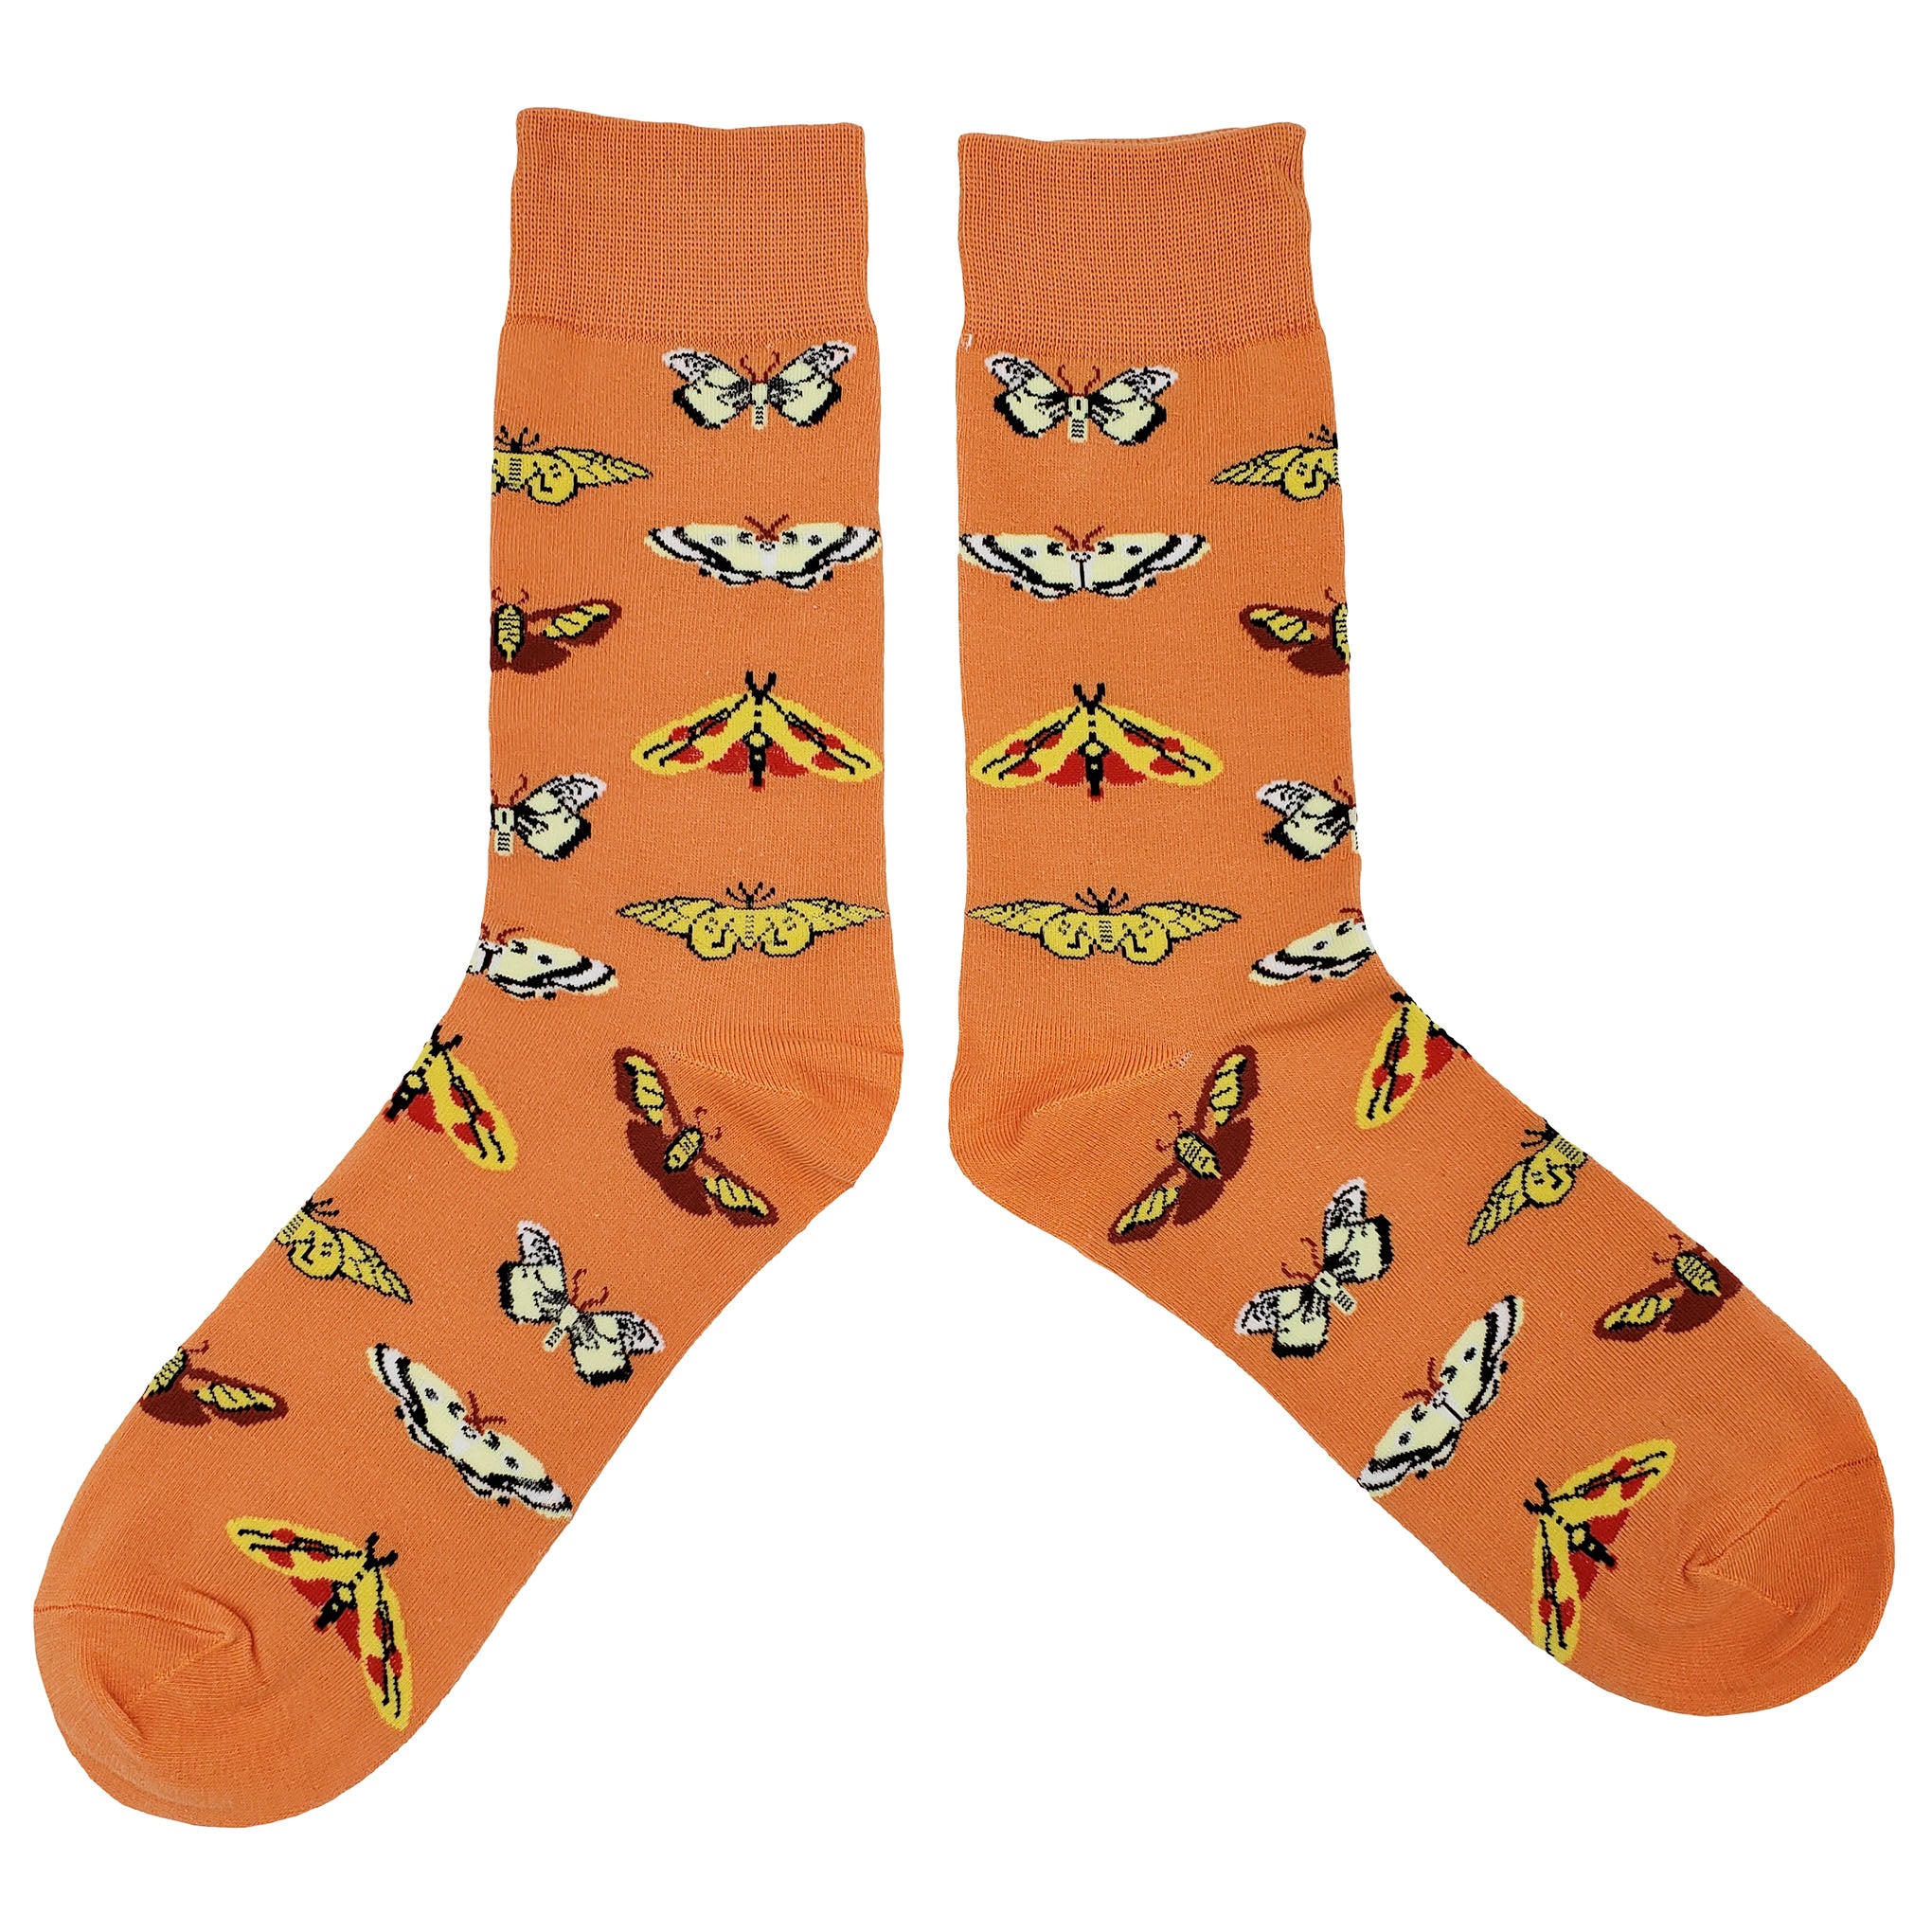 Butterfly Socks - Fun and Crazy Socks at Sockfly.com